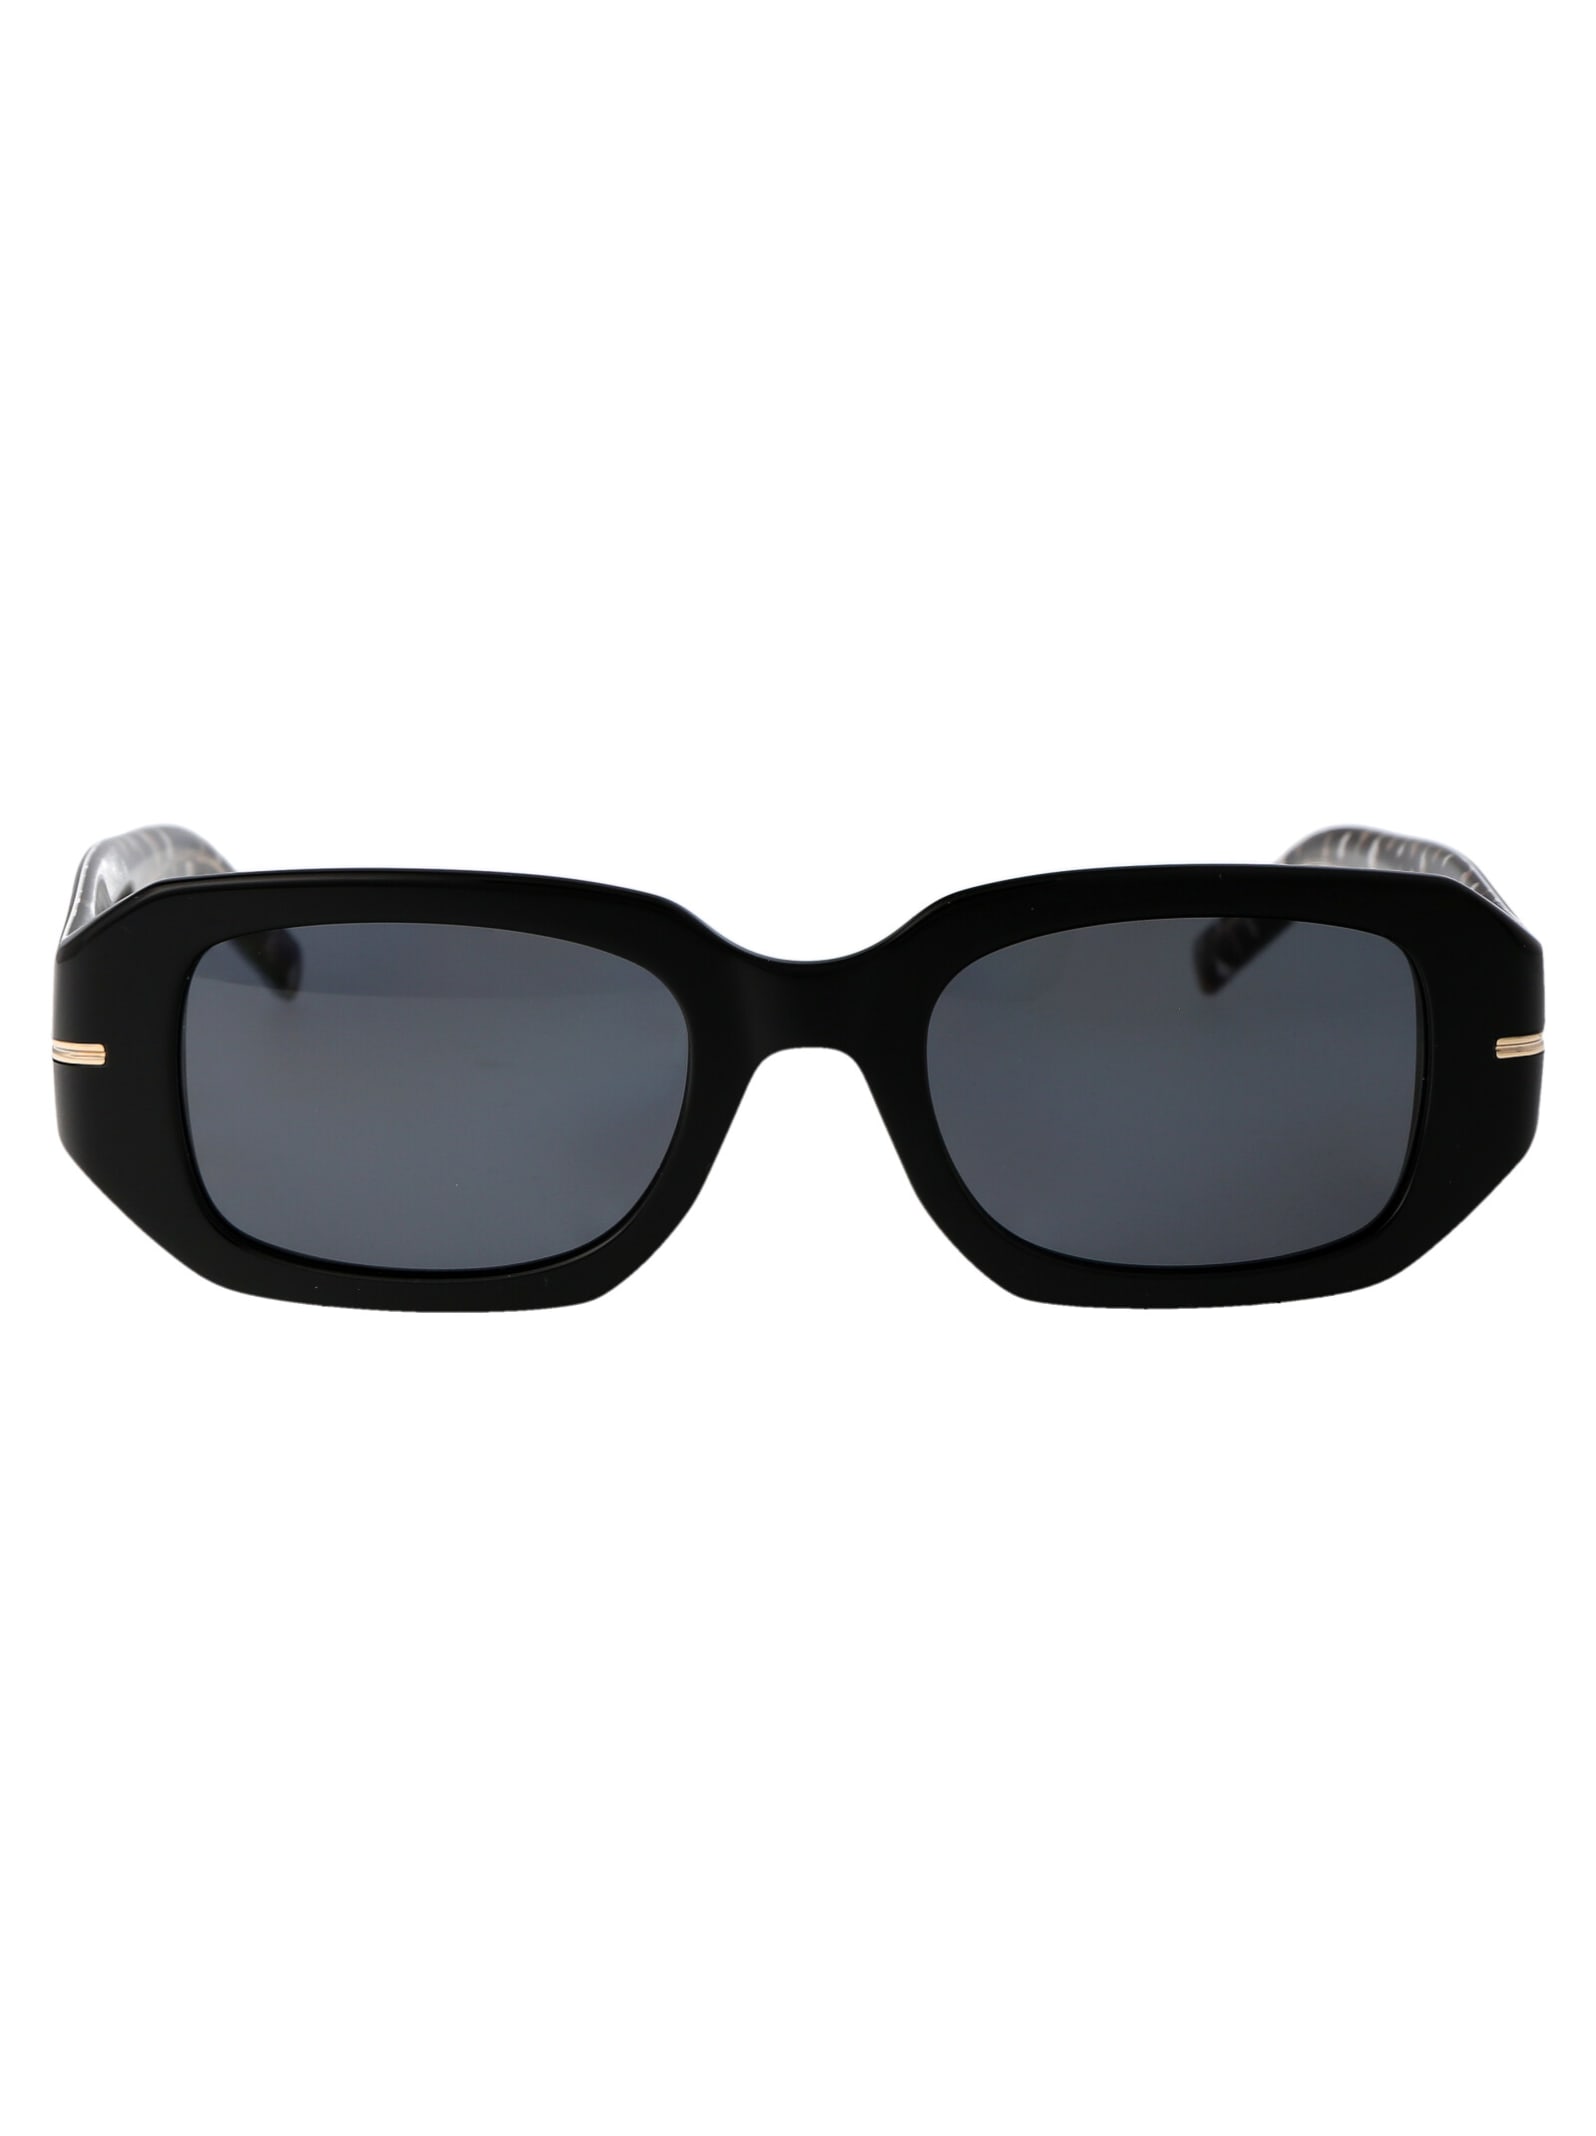 Boss 1608/s Sunglasses